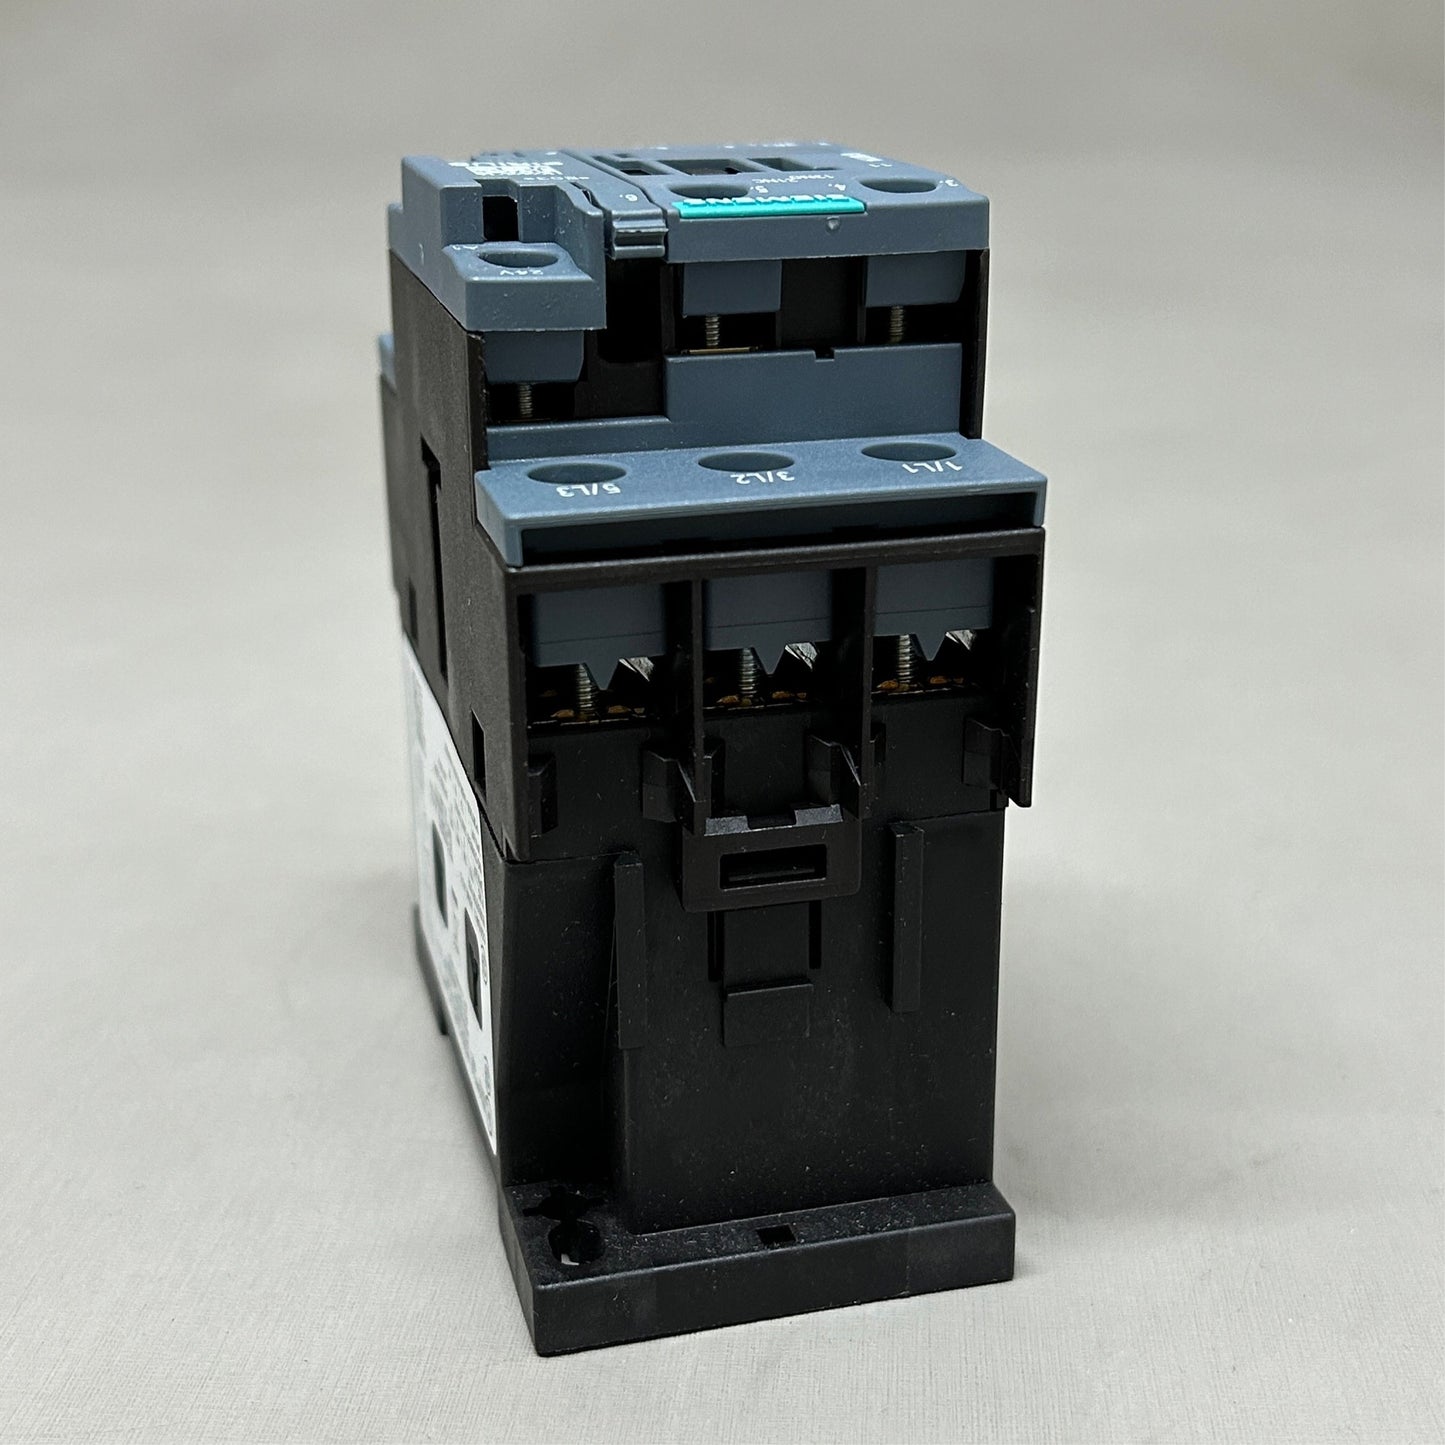 SIEMENS Power Contactor 3-Pole 24V 50Hz Black Sz S0 3RT2026-1AB00 (New)